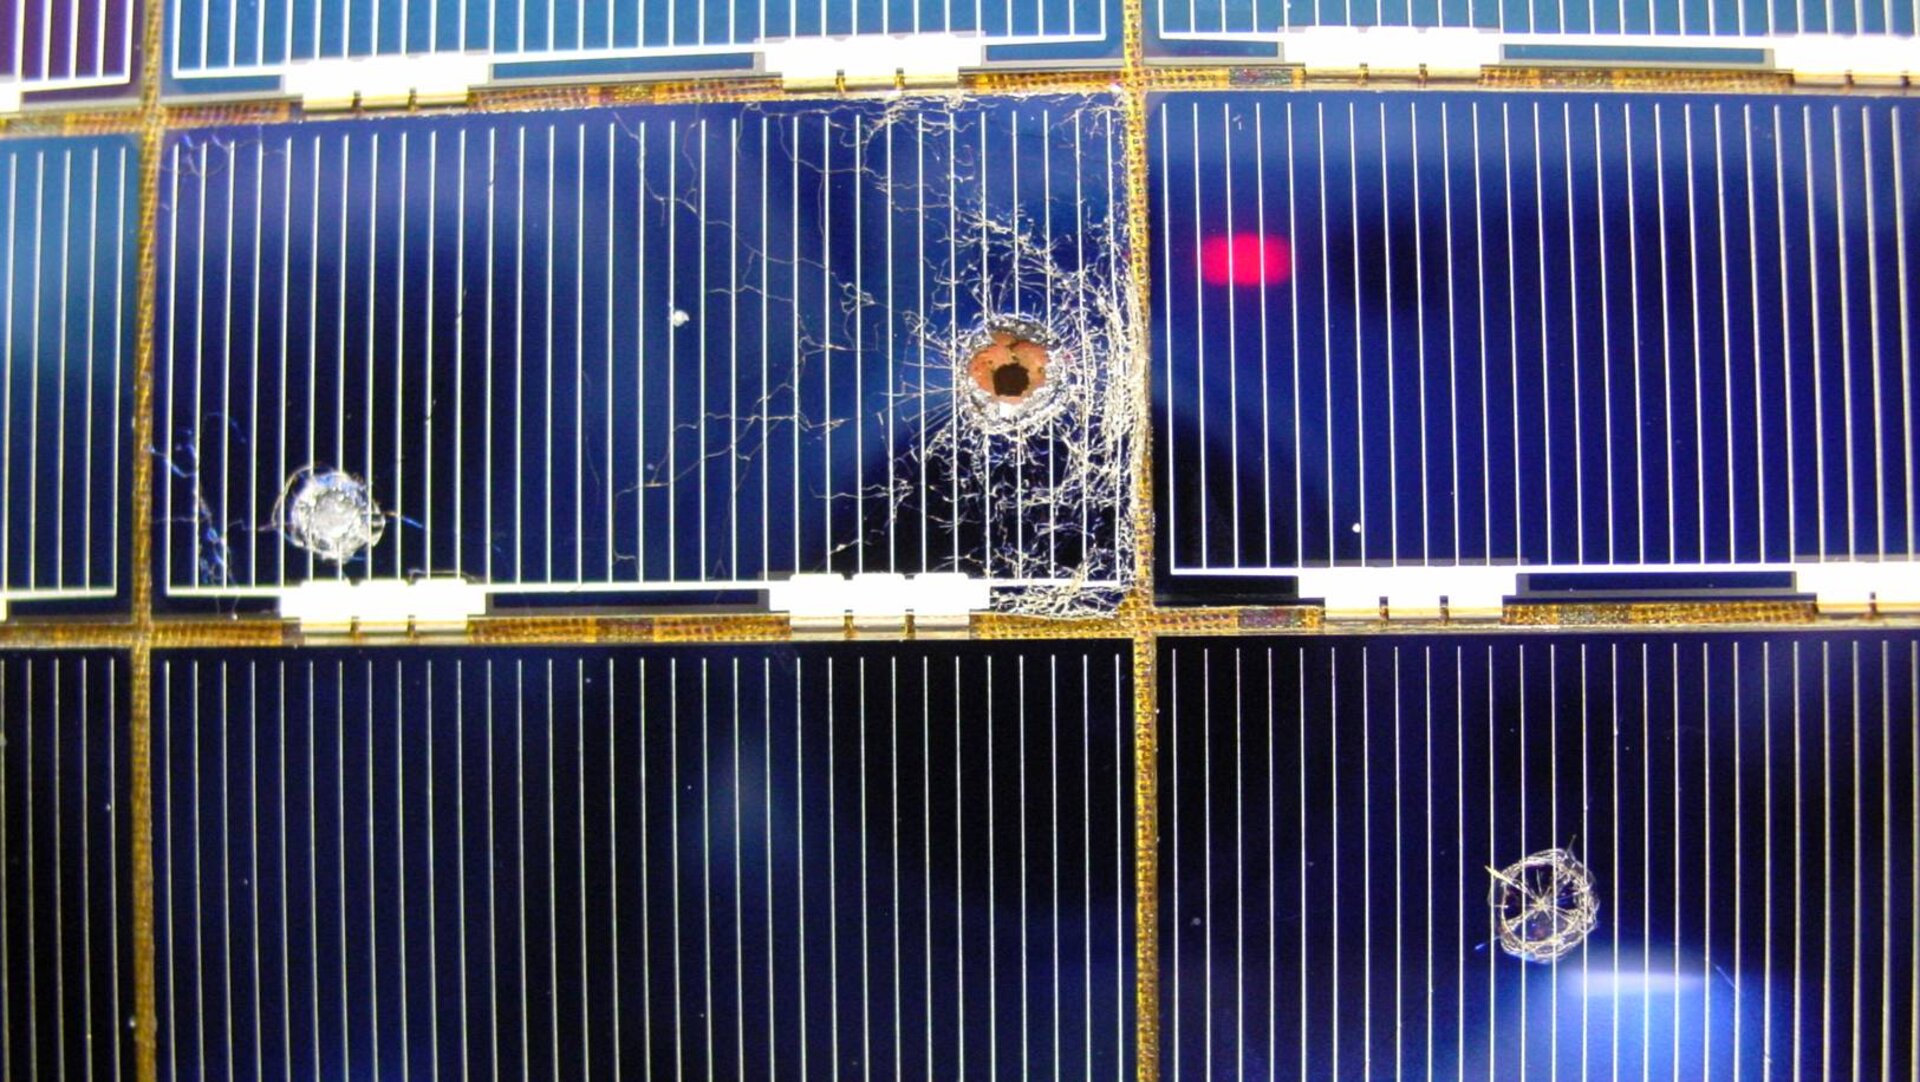 Impacts seen on returned solar arrays: averaging four holes per square metre